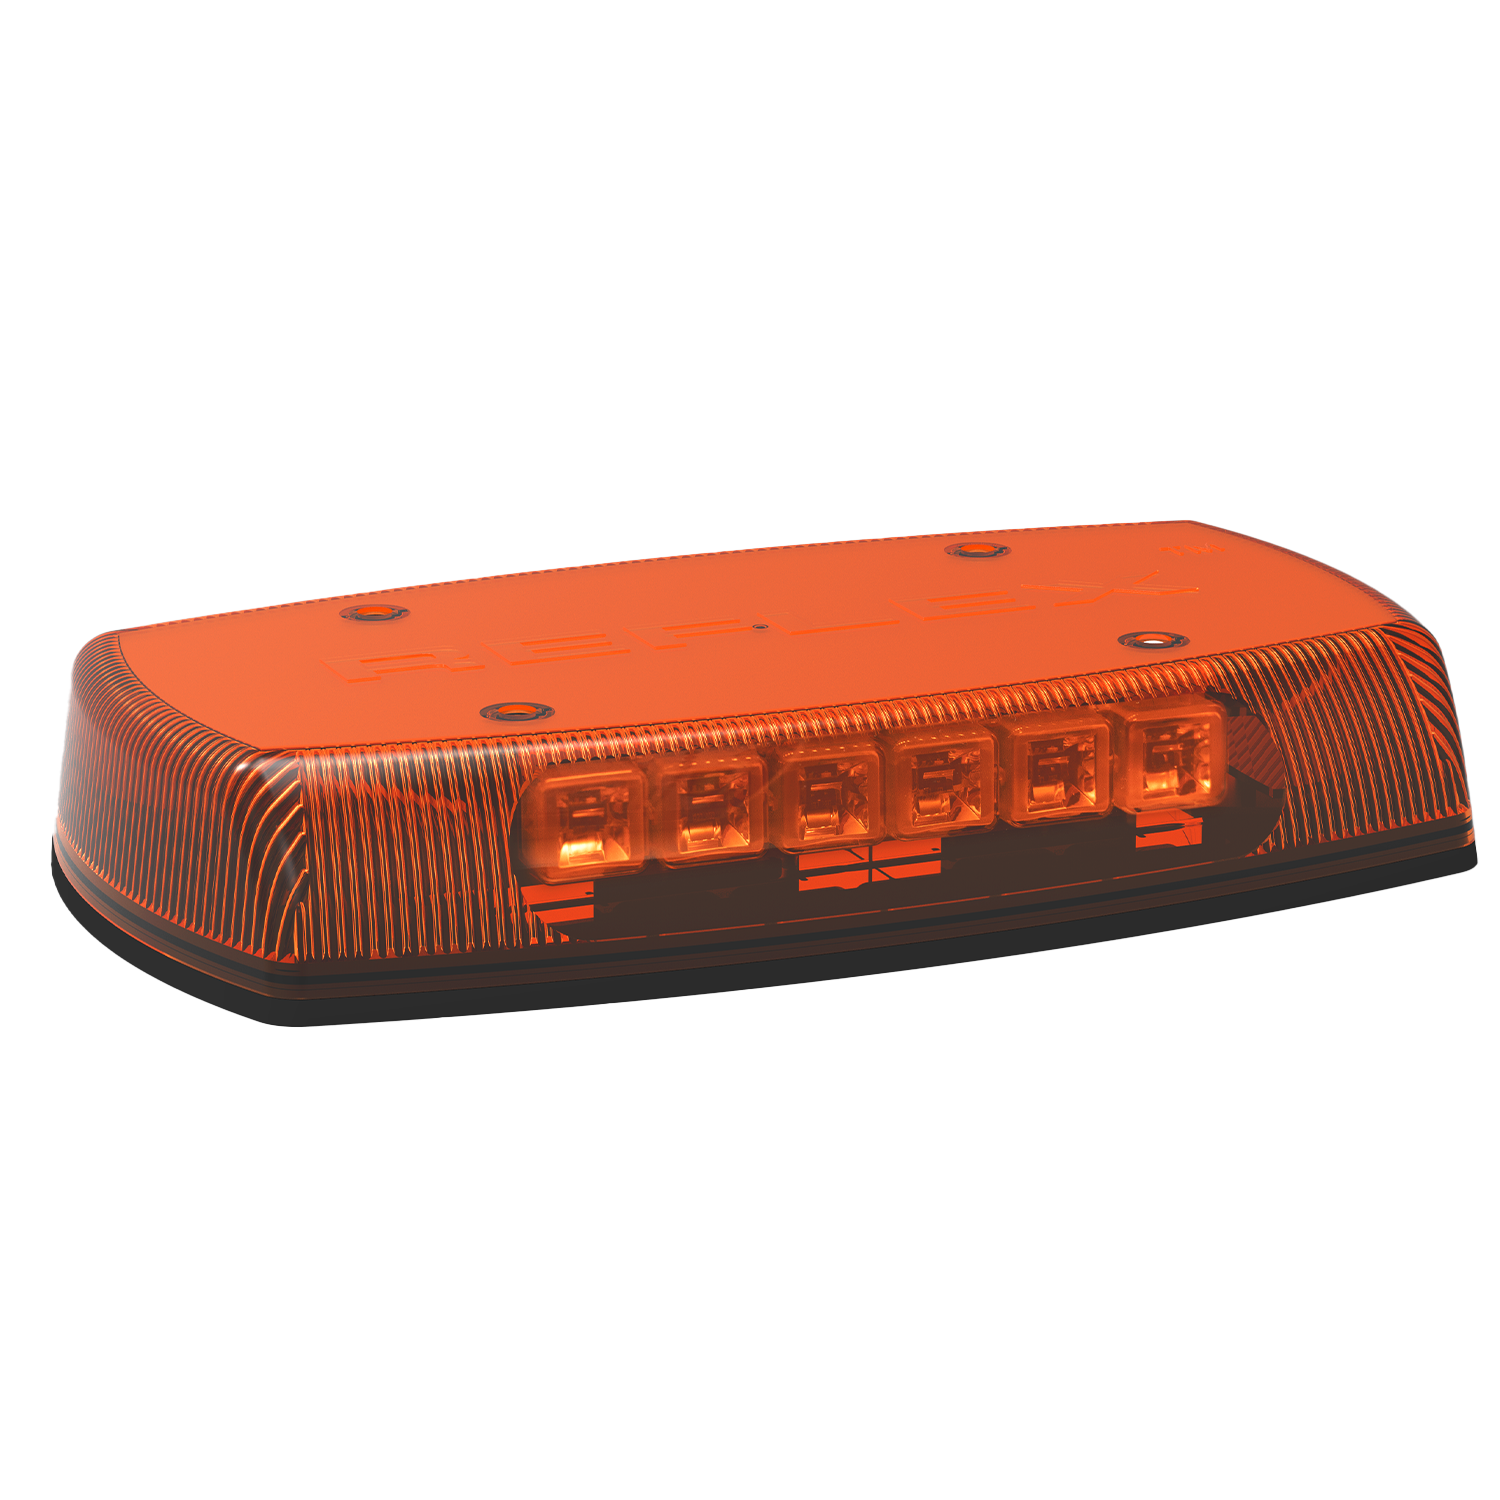 Mini Emergency LED Light Bar - Magnetic Mount -12V Plug